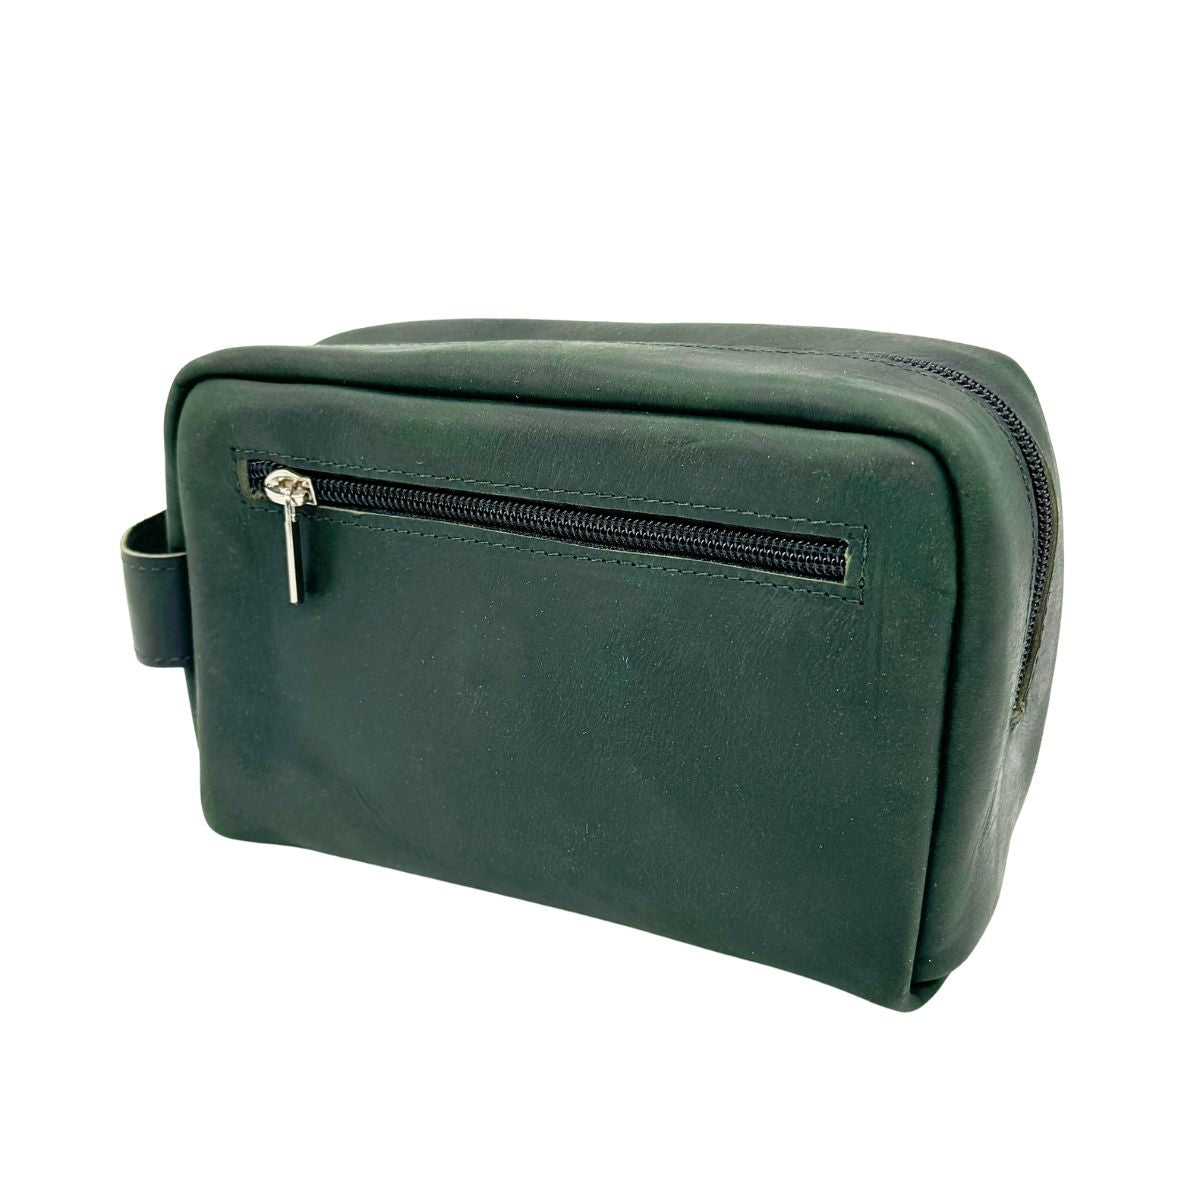 Leather Toiletry Bag - dark green